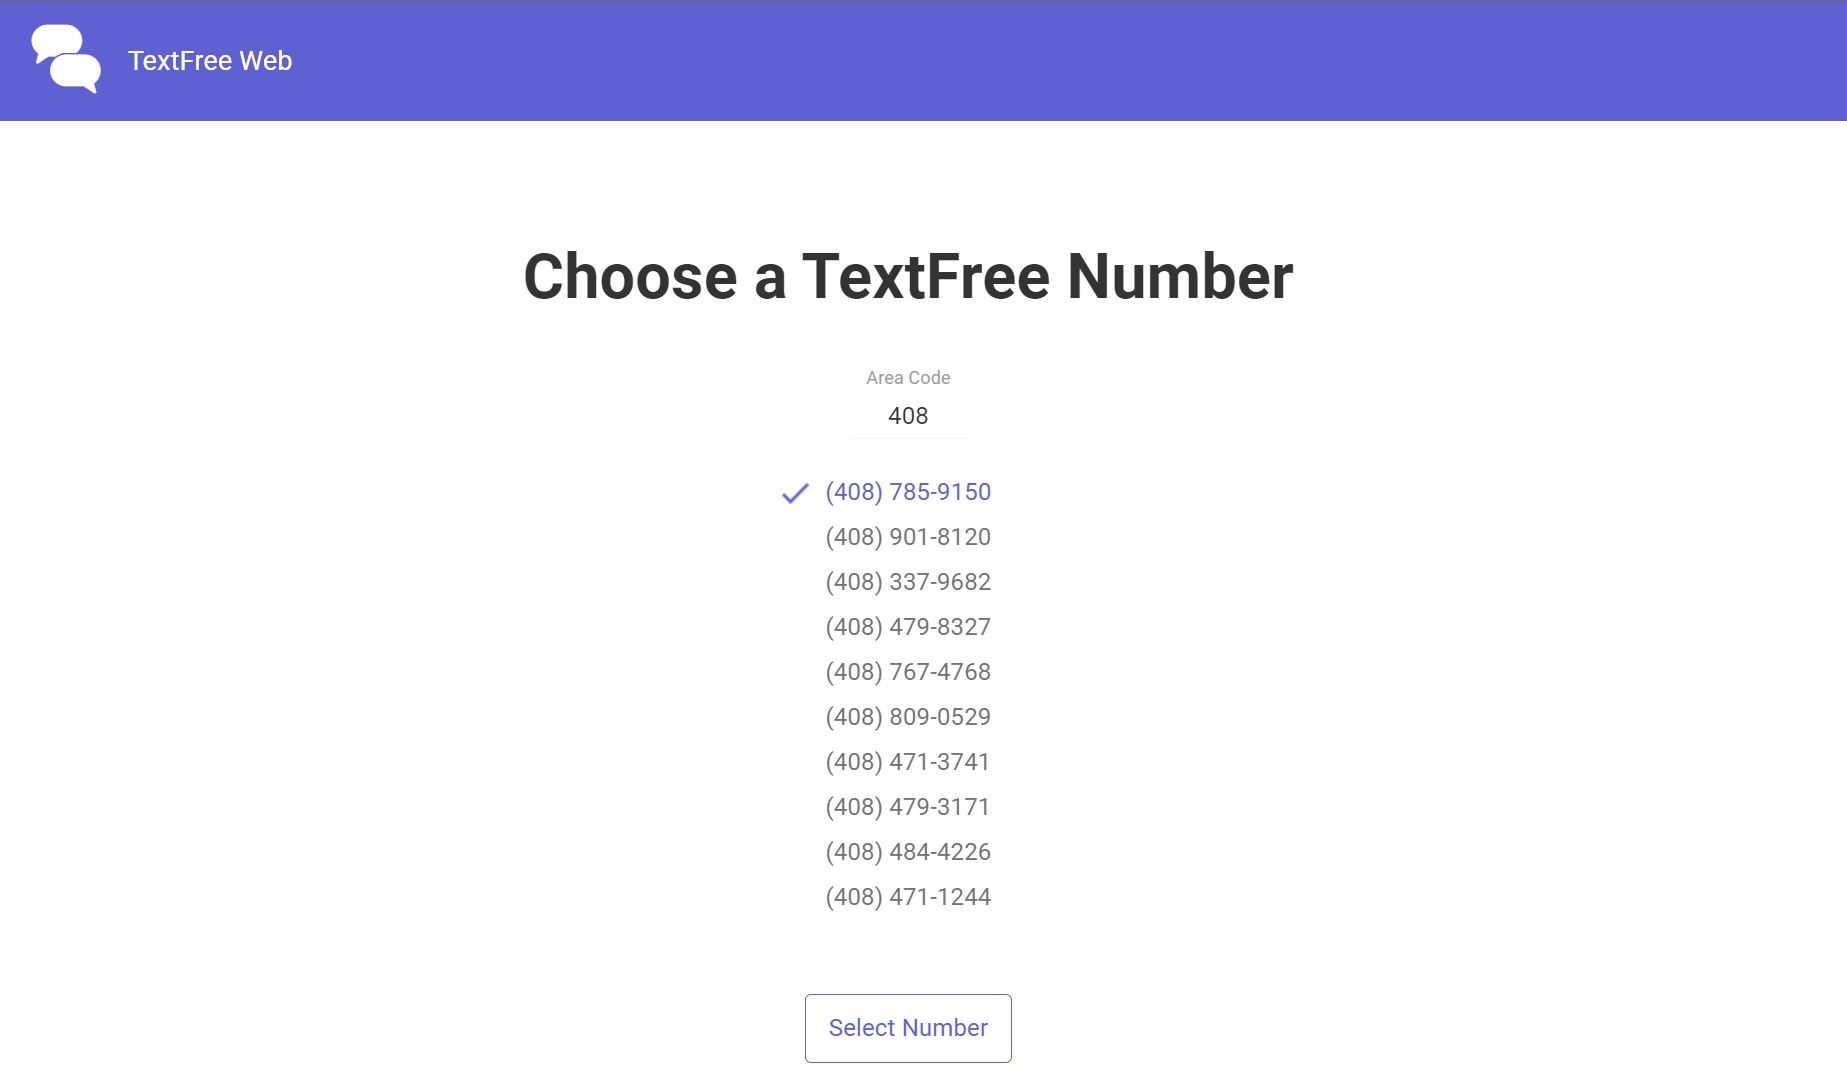 Textfree web app